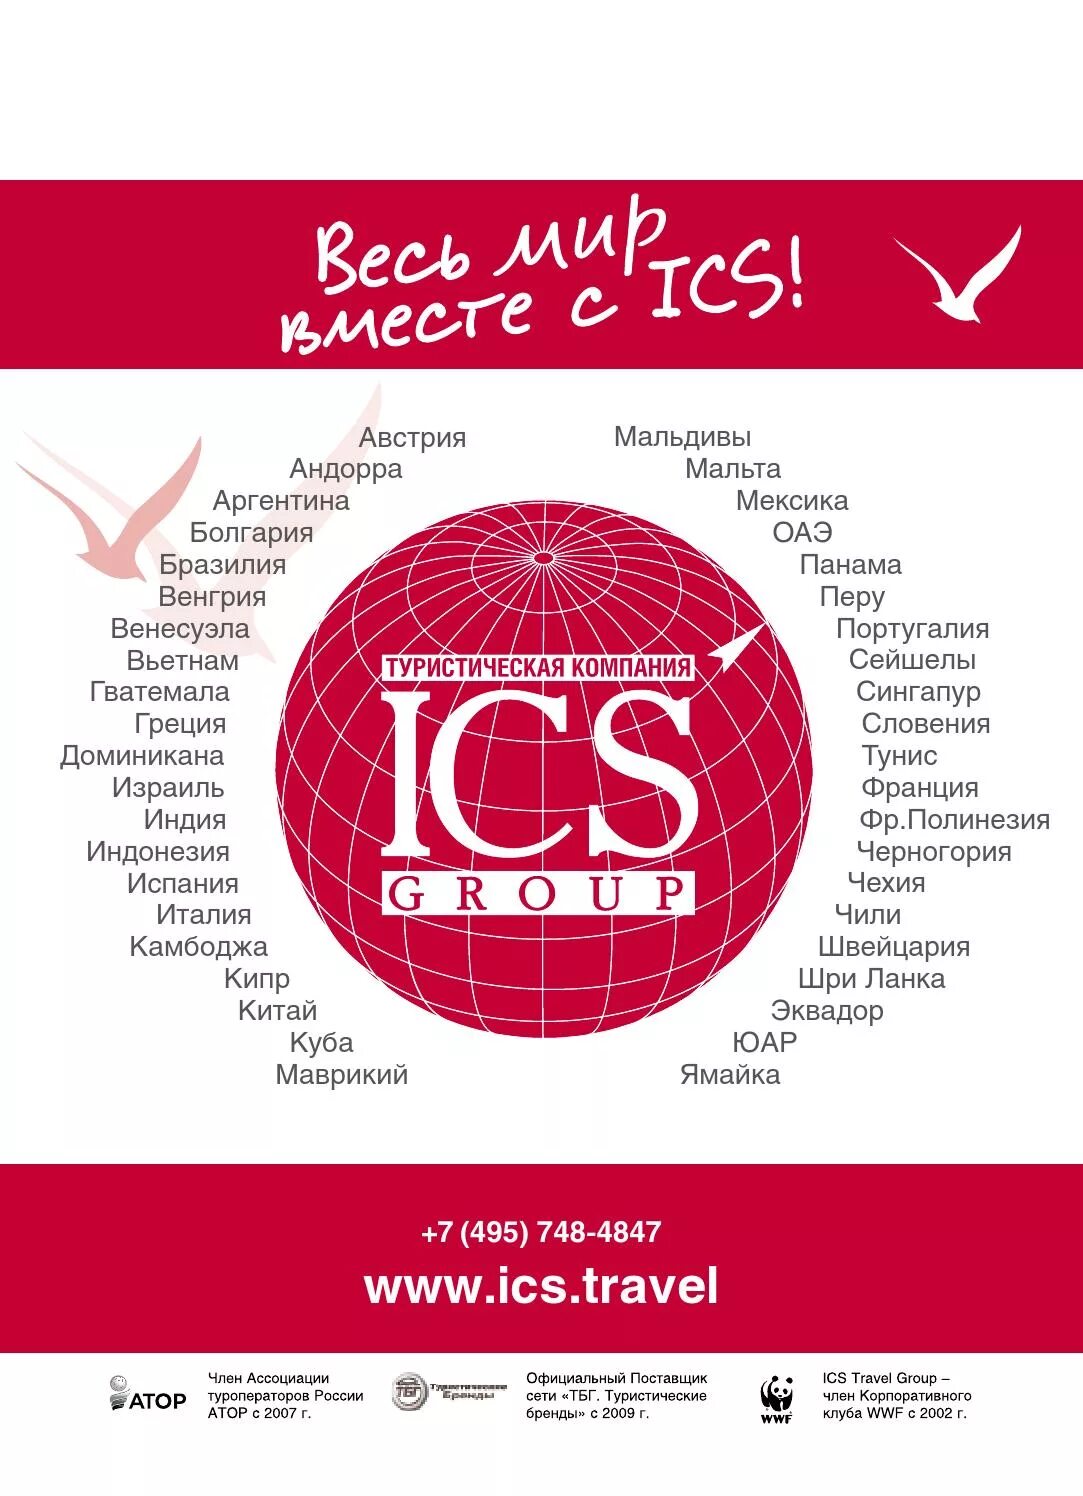 Ай си эс сайт. ICS Group туроператор. Туроператор ICS Travel. ICS Travel Group реклама. ICS туроператор логотип.